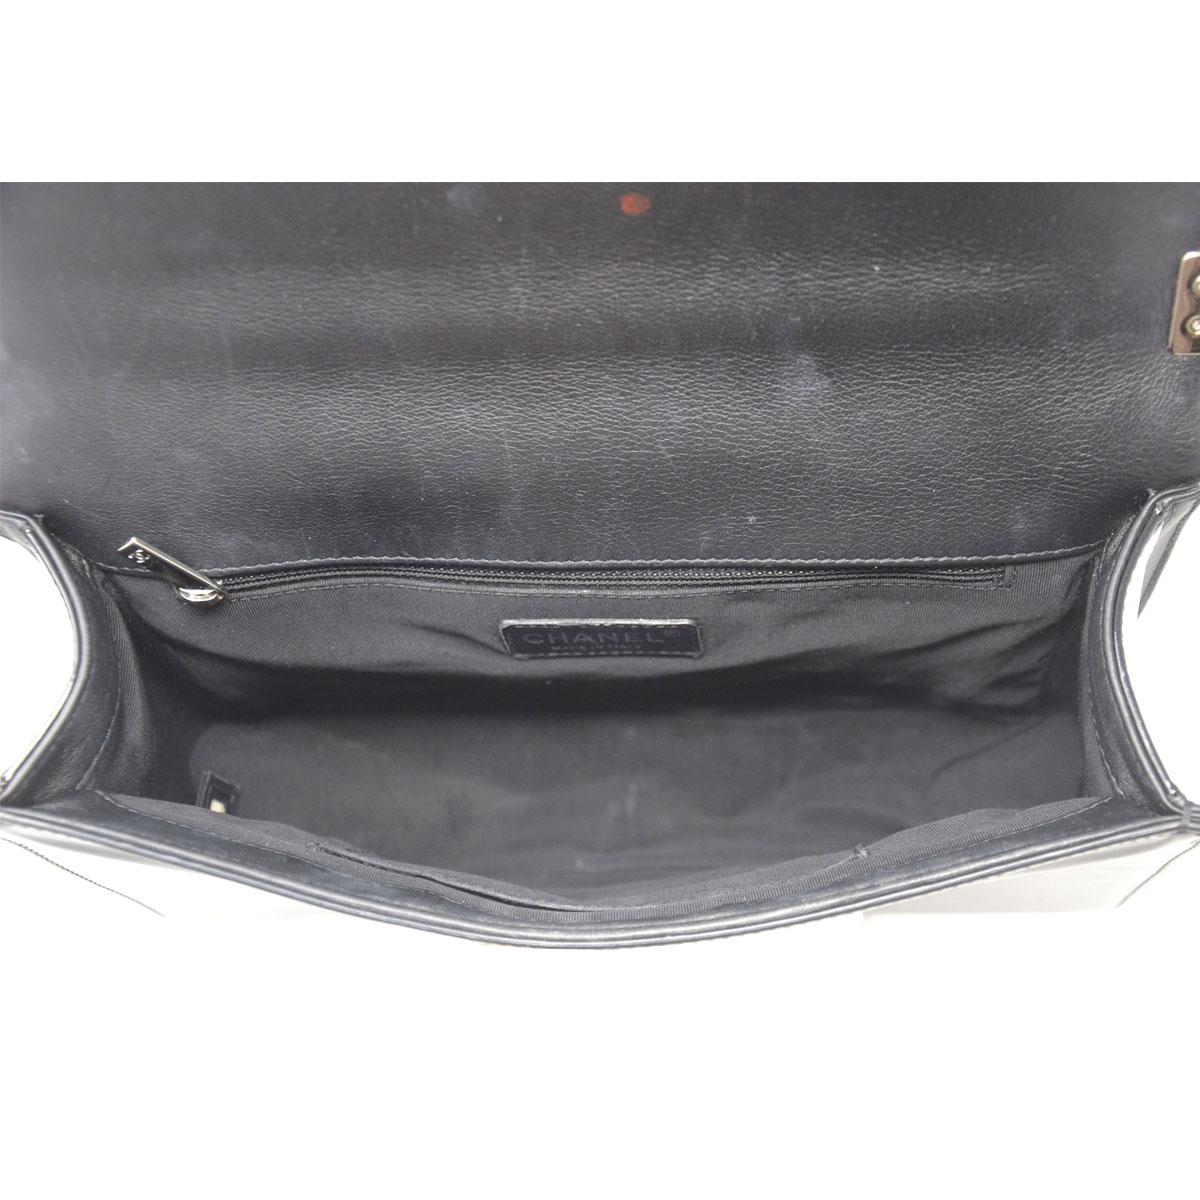 Chanel Le Boy Bag SHW Black Jumbo Patent Leather 4